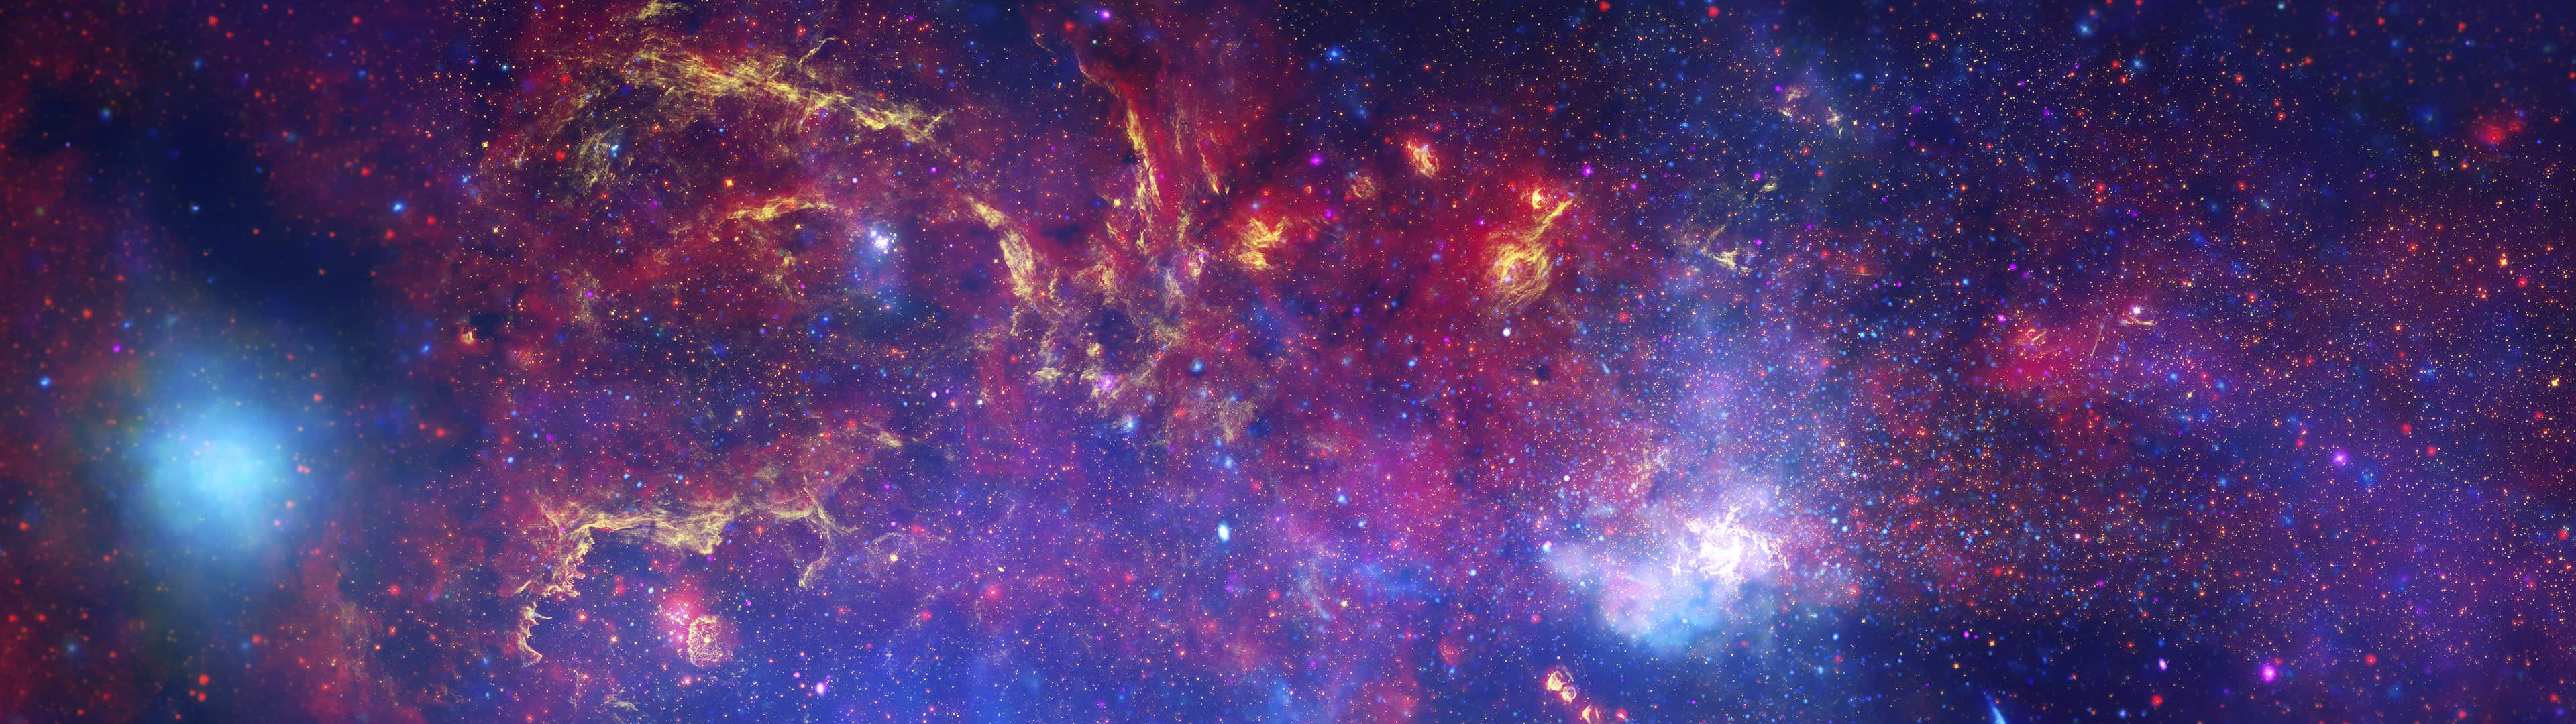 4K Milky Way Galaxy Wallpapers